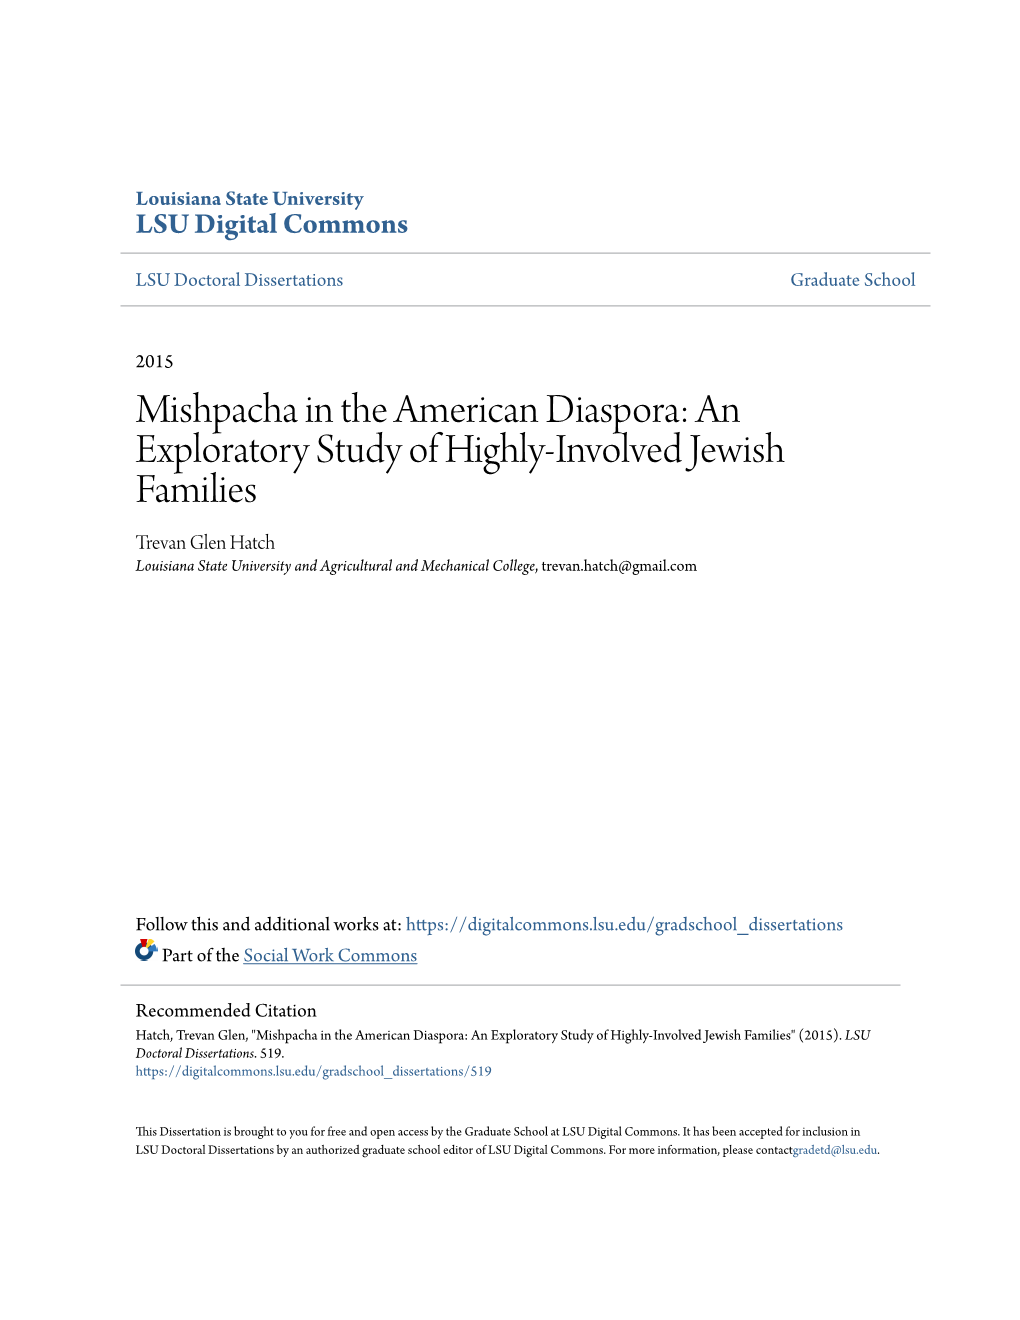 Mishpacha in the American Diaspora